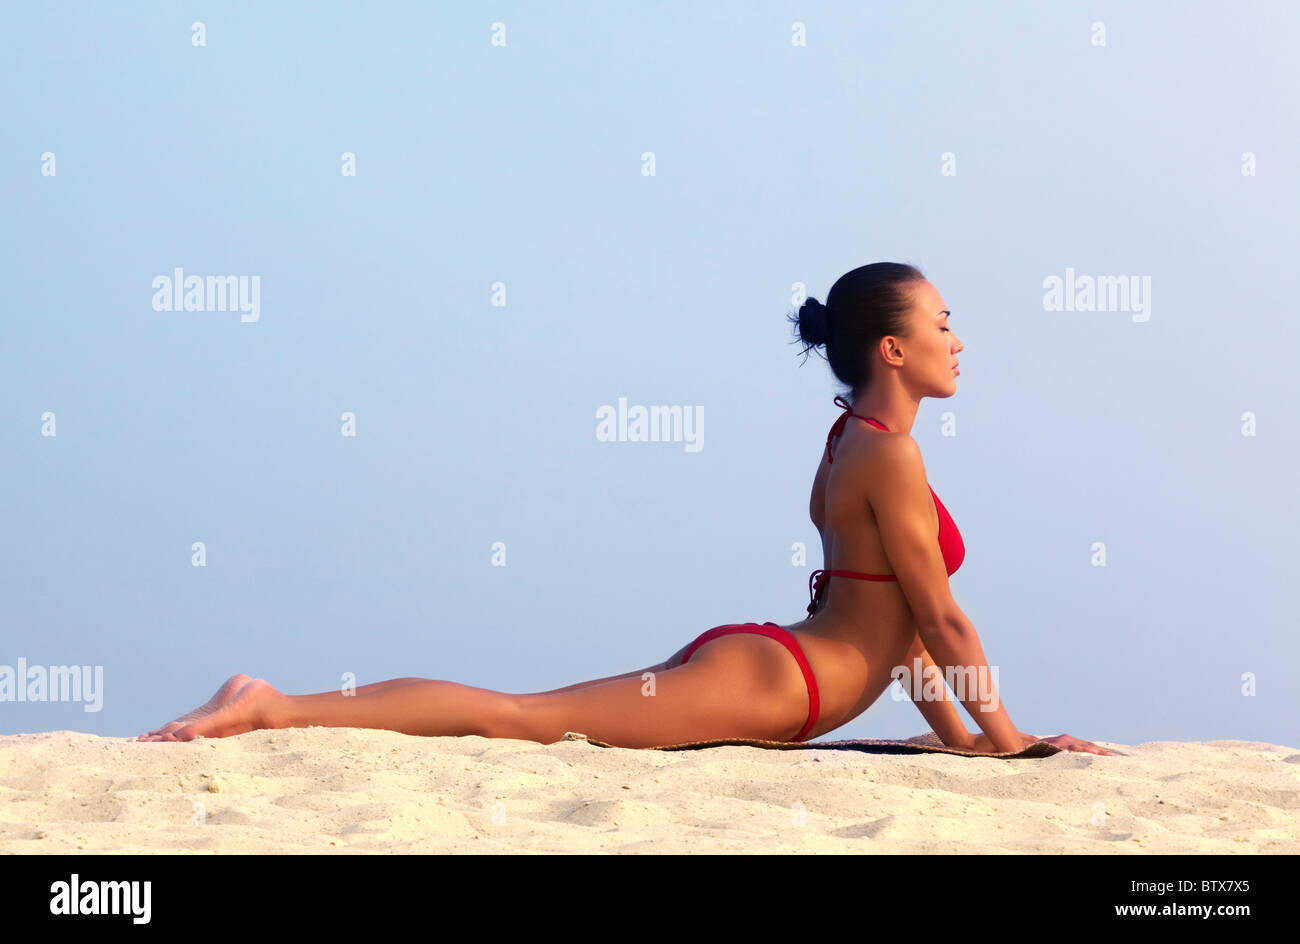 Image of female in red bikini sunbathing on sandy beach during vacation Stock Photo